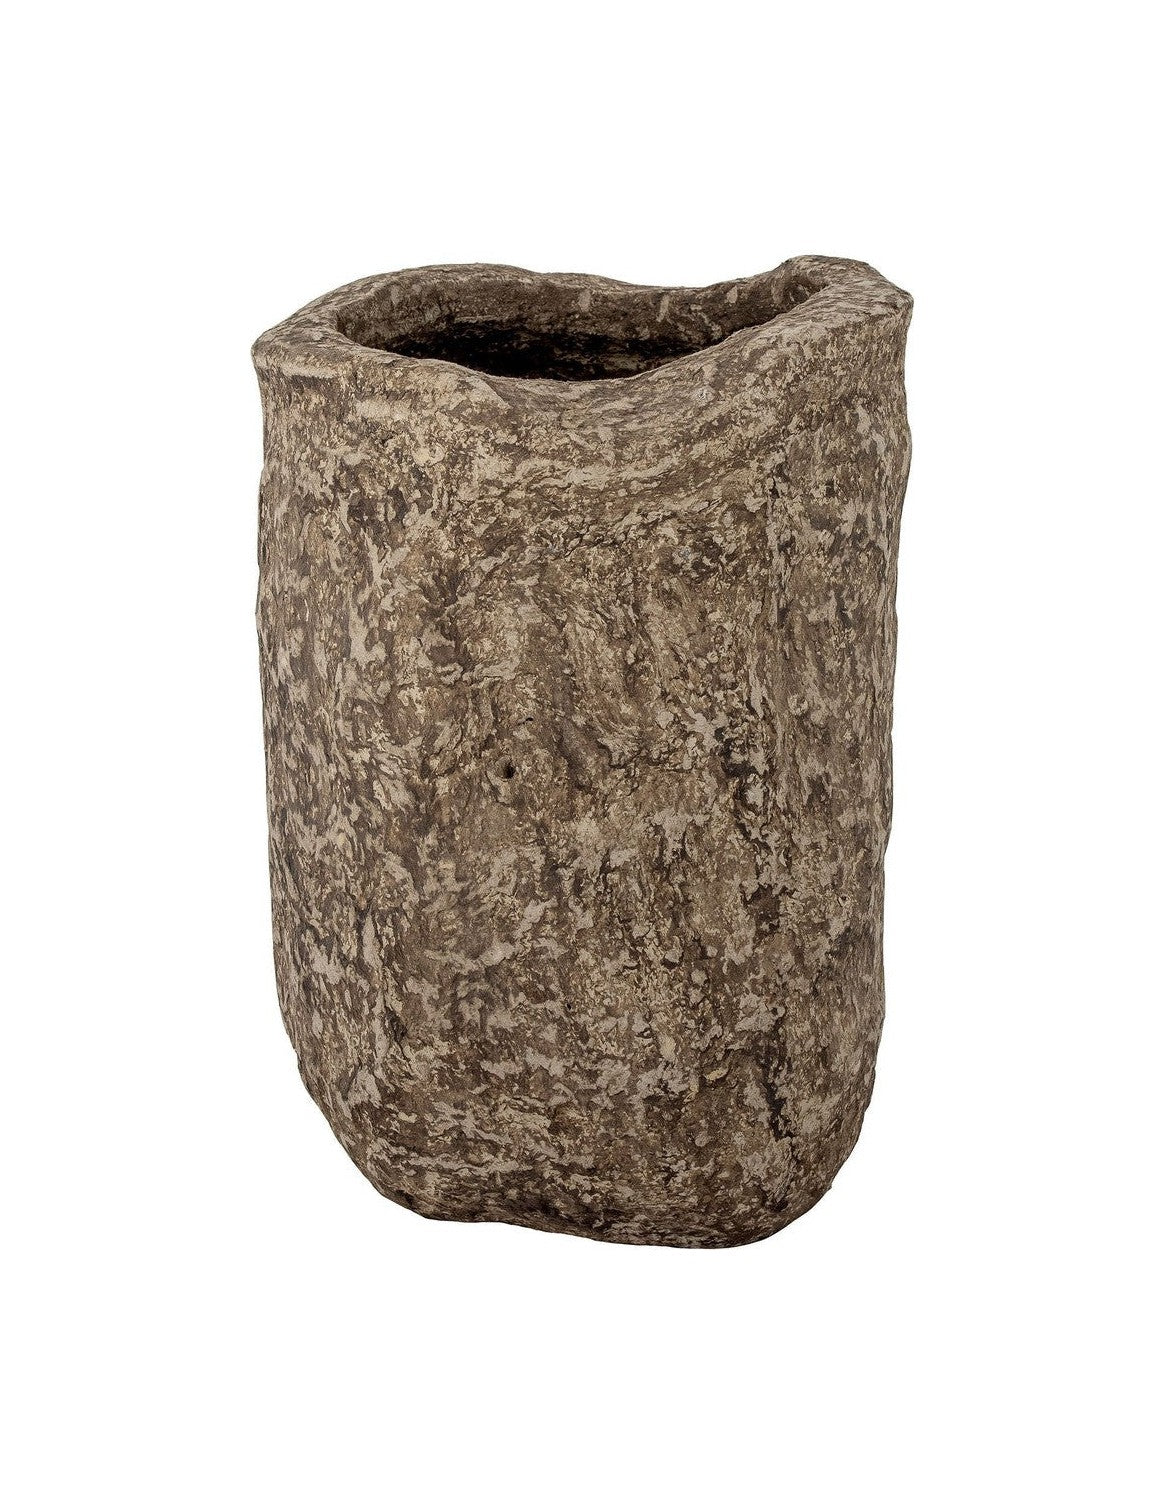 Bloomingville Janay Deco Vase, Brown, Paper Mache